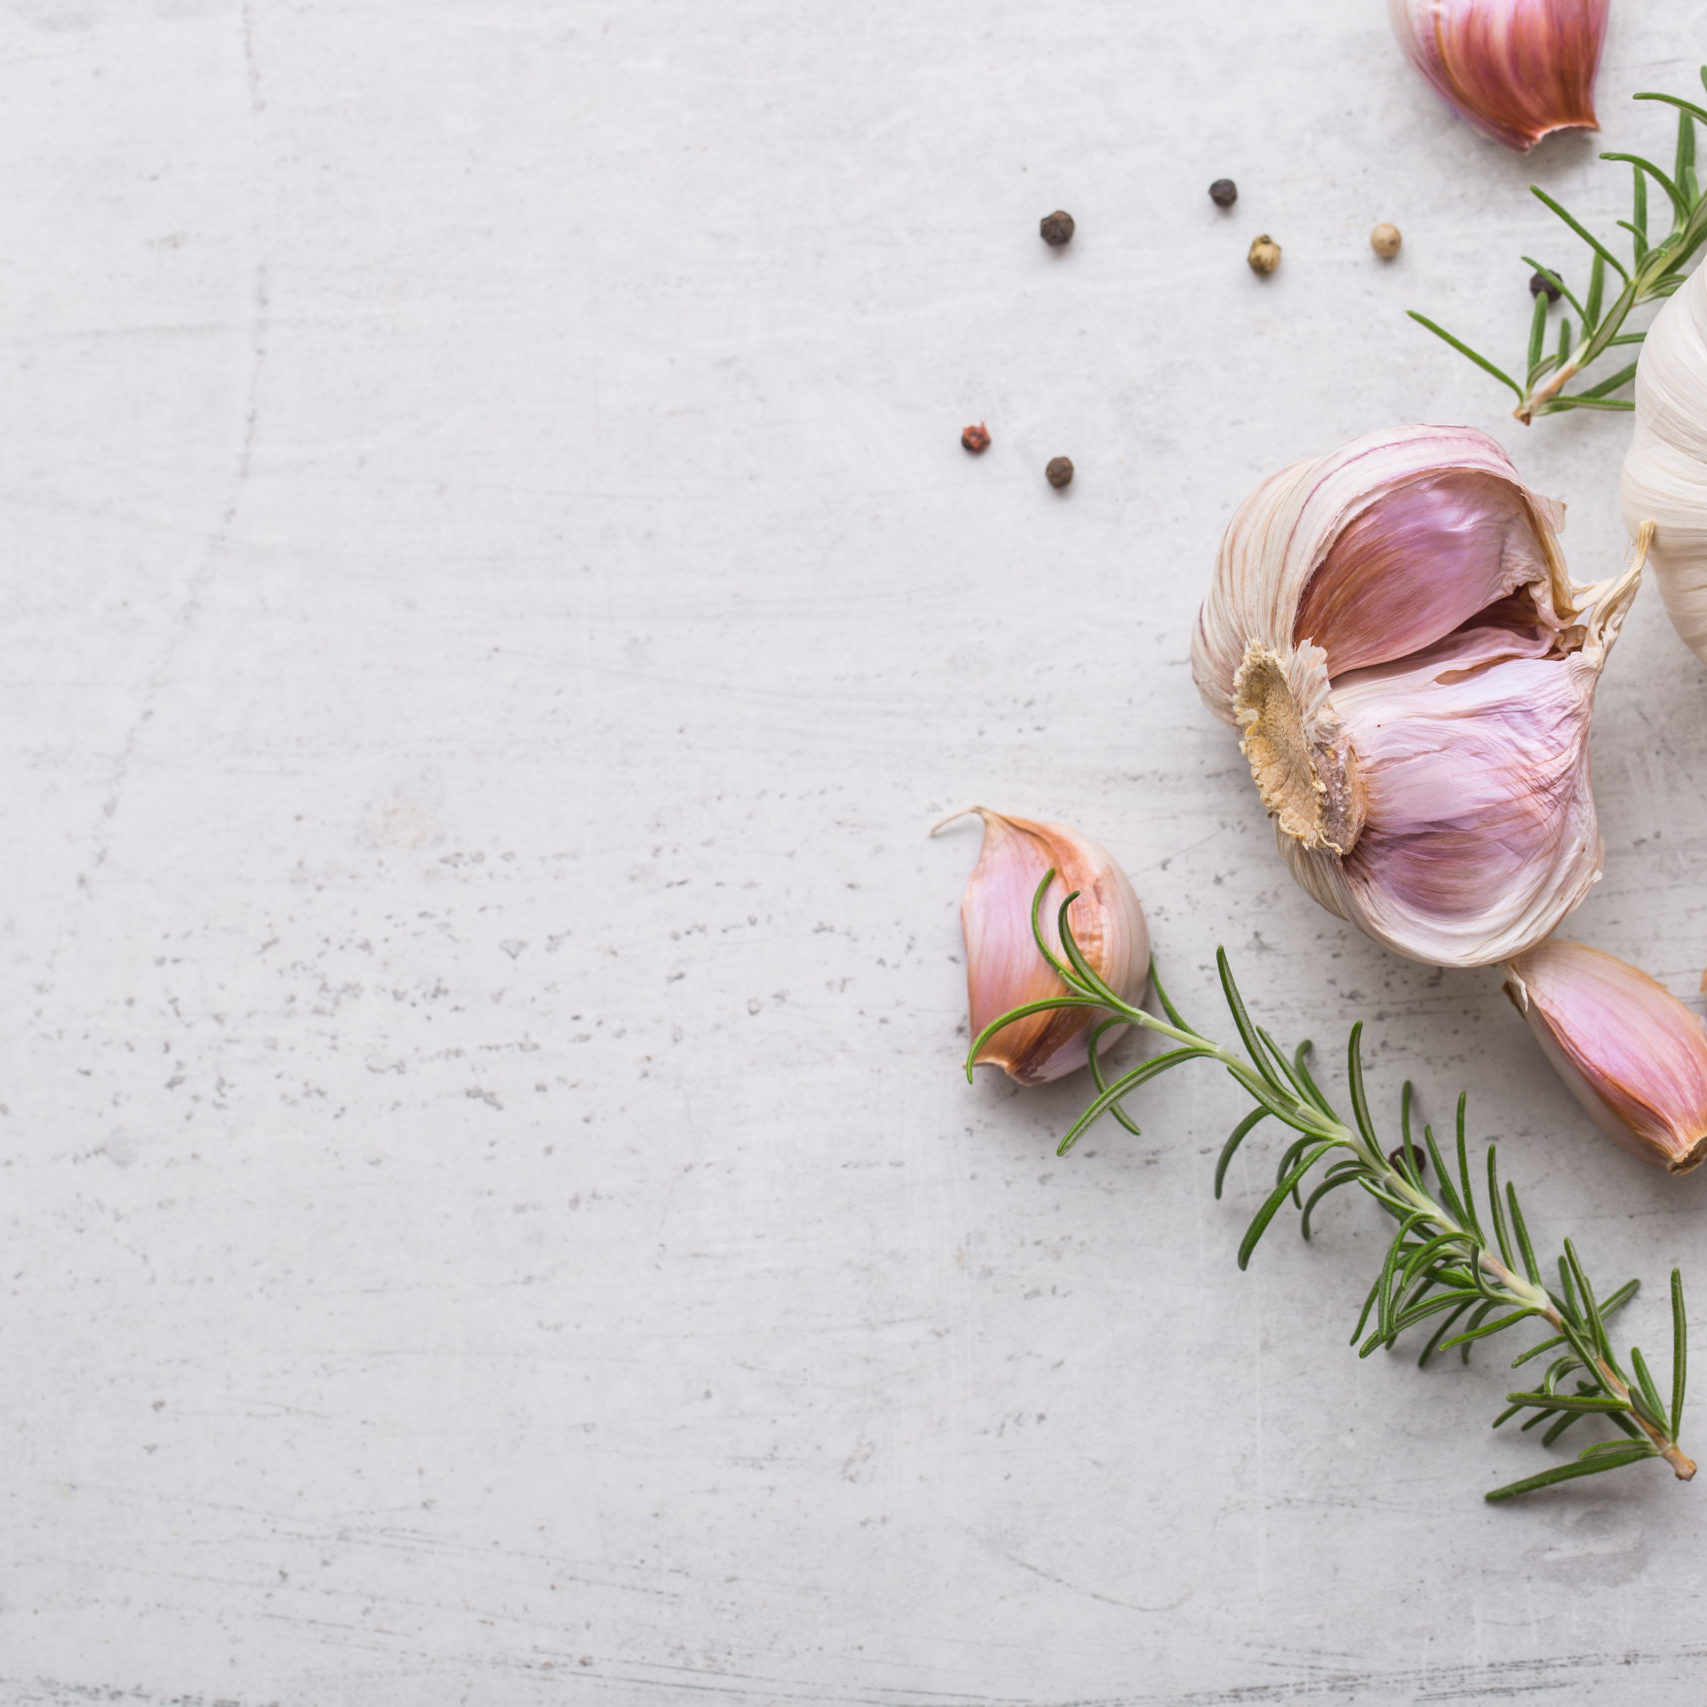 Garlic. Garlic bulbs. Fresh garlic with rosemary and pepper on white concrete board.